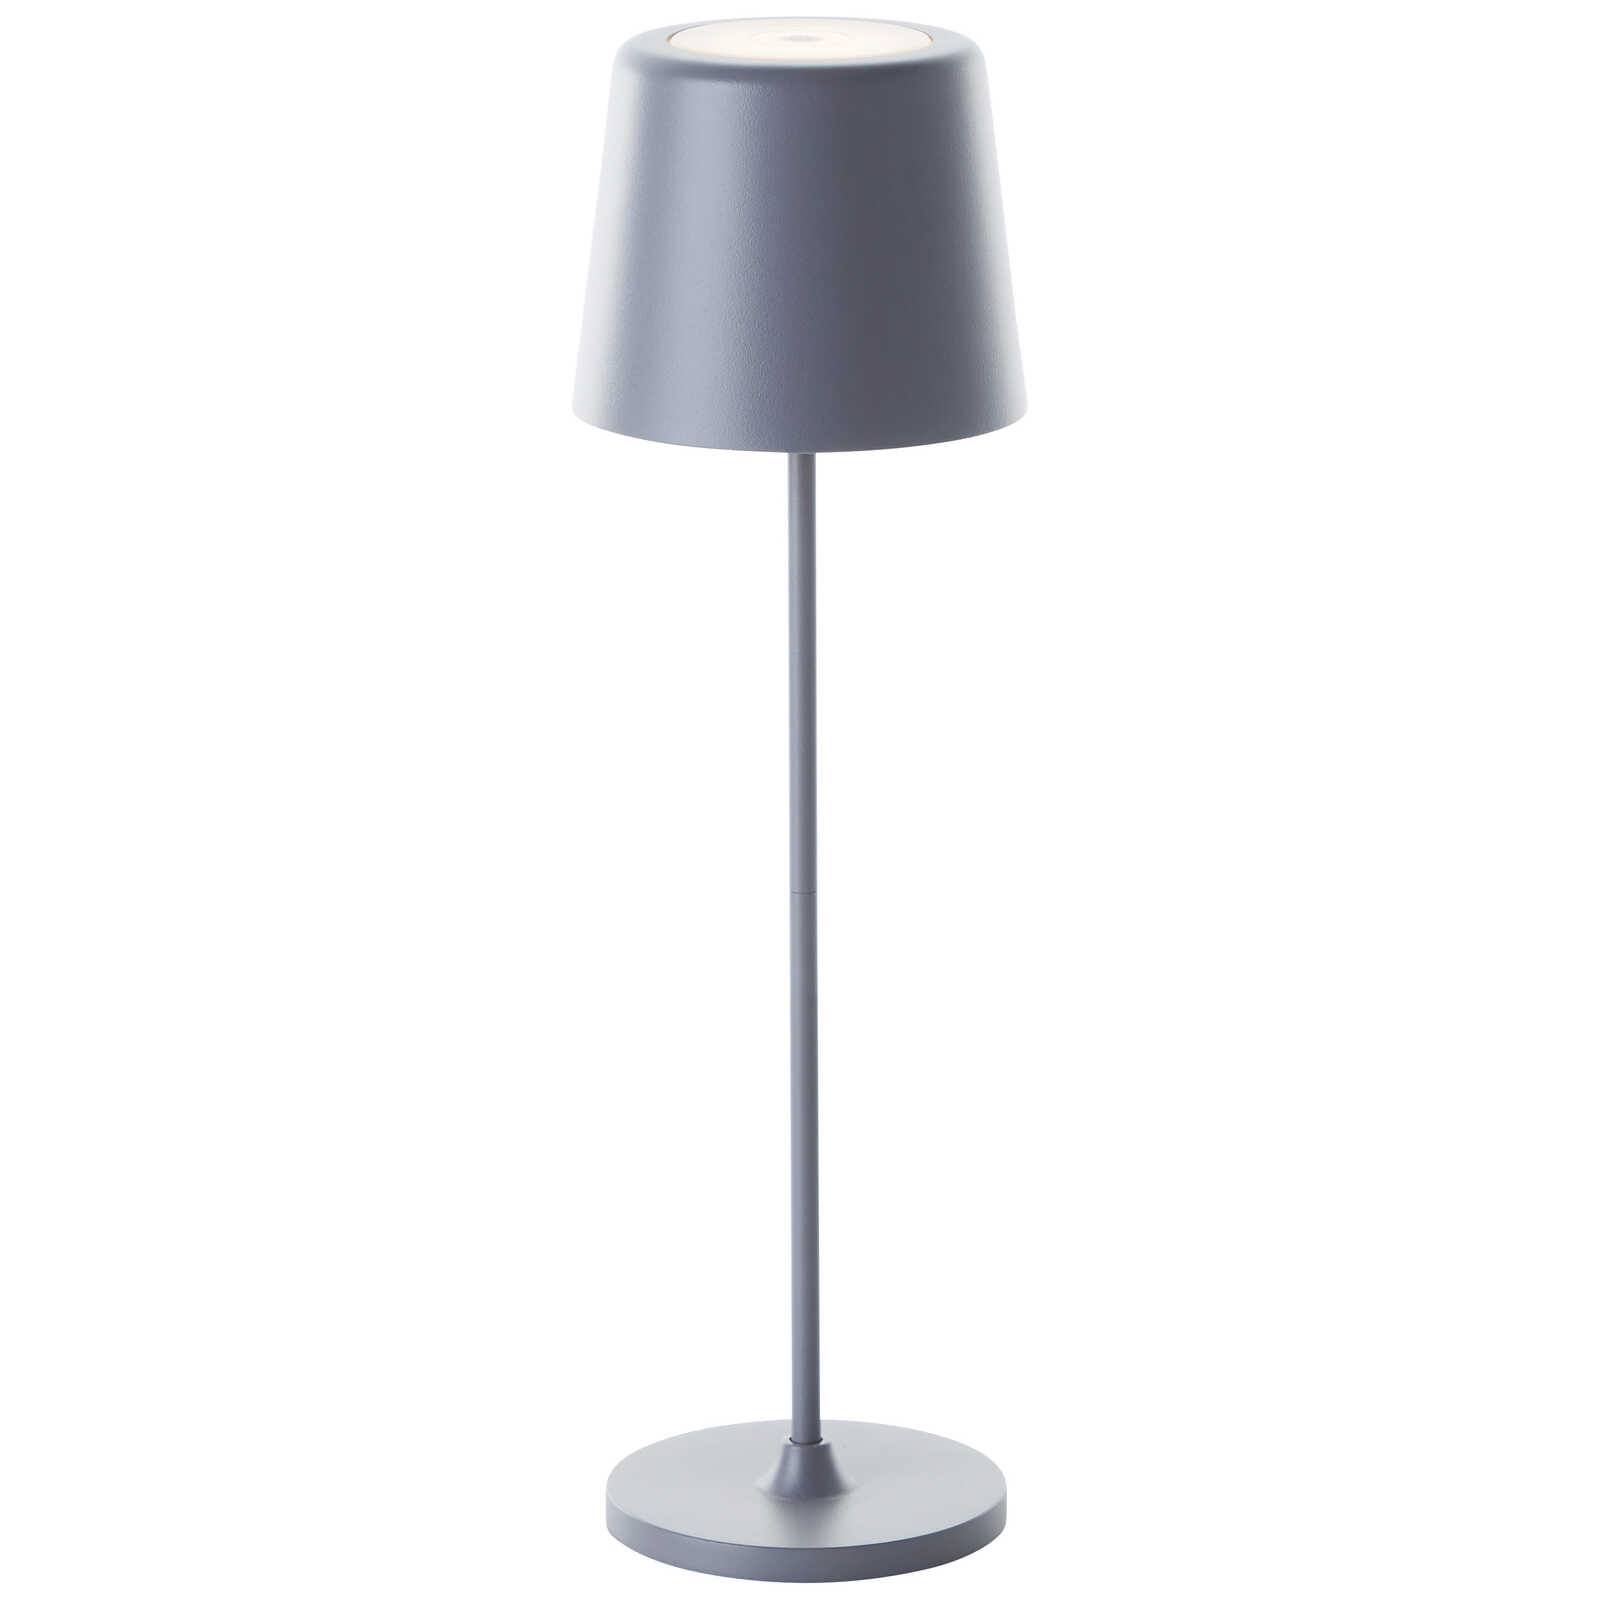             Lampe de table en métal - Cosy 4 - Gris
        